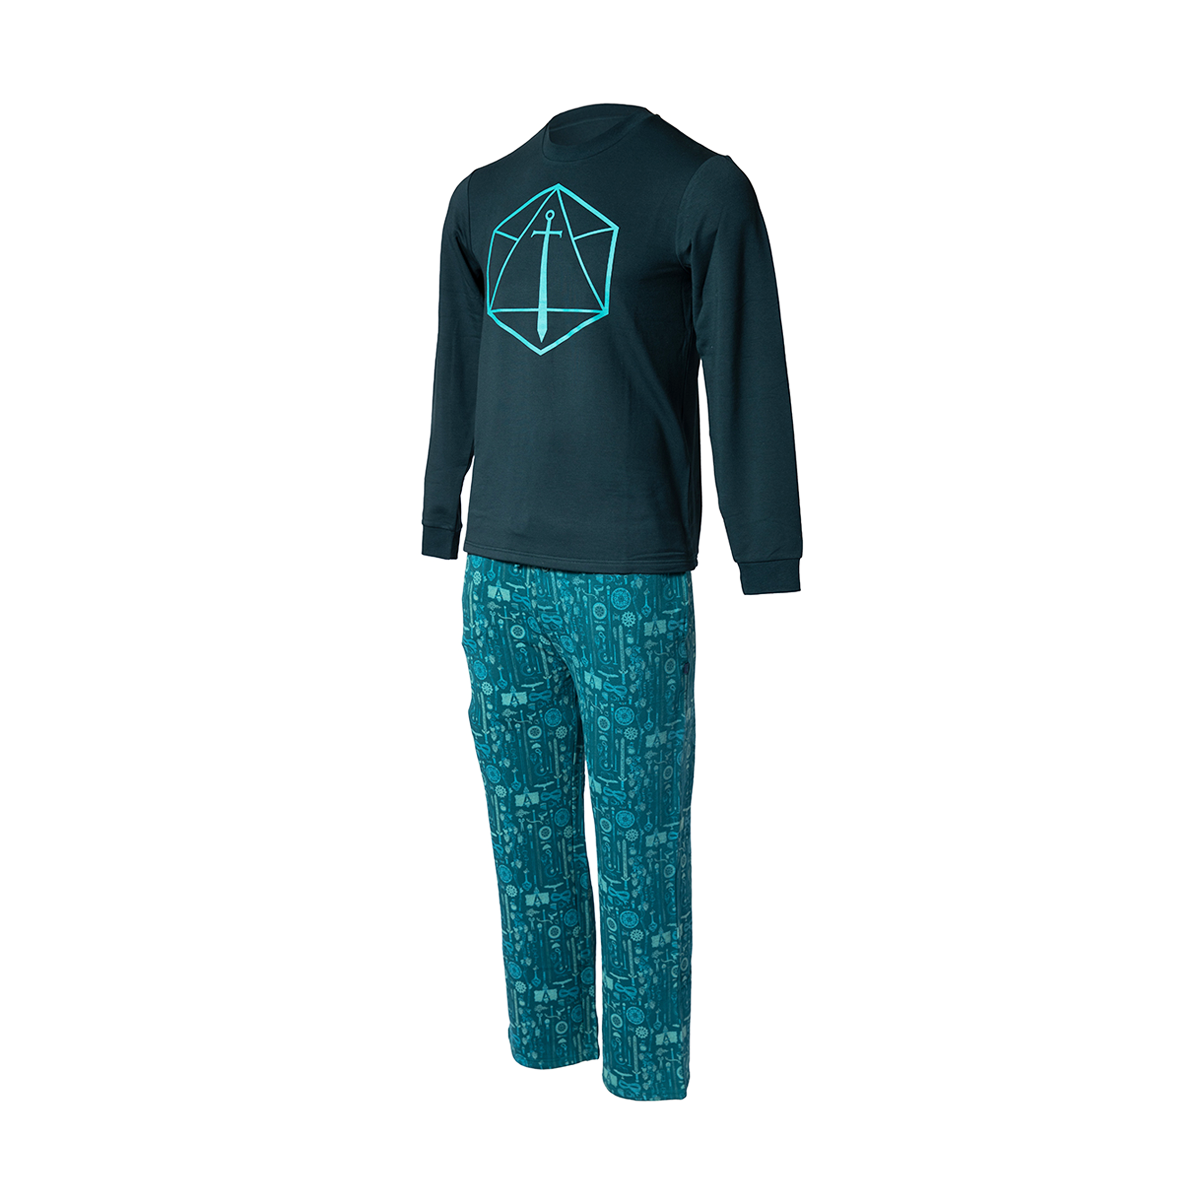 Shop Lv Pajamas online